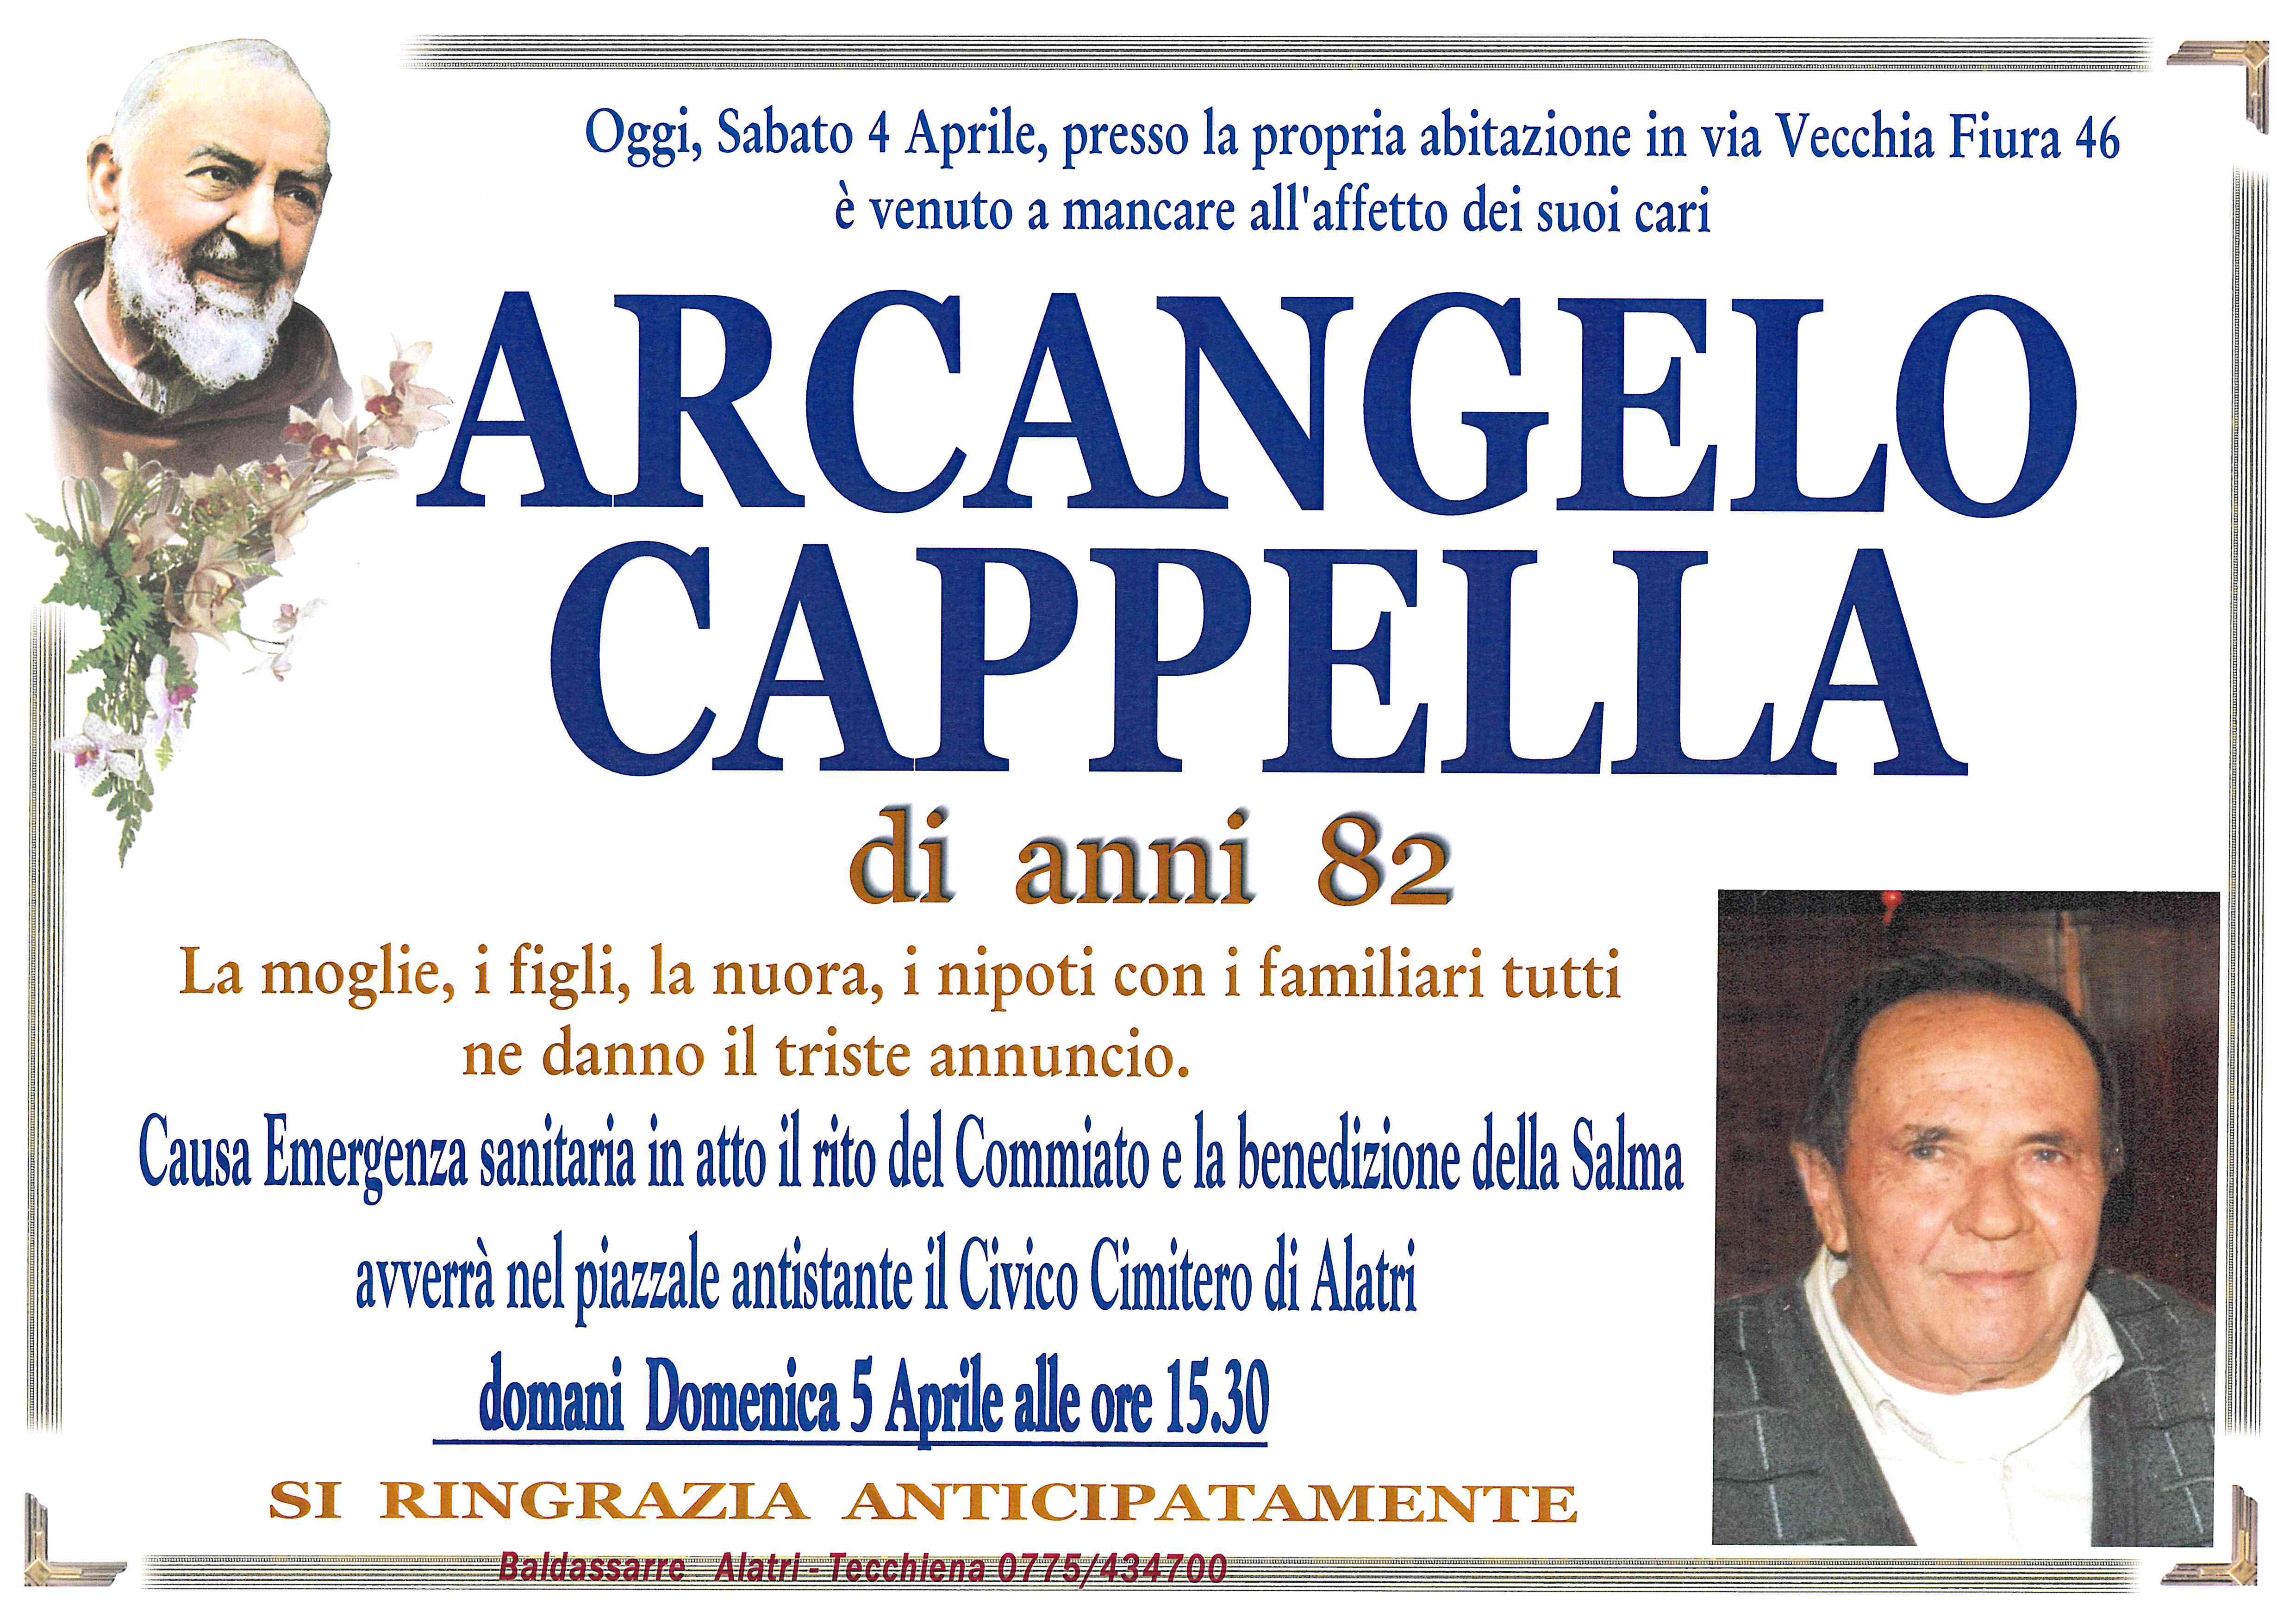 Arcangelo Cappella